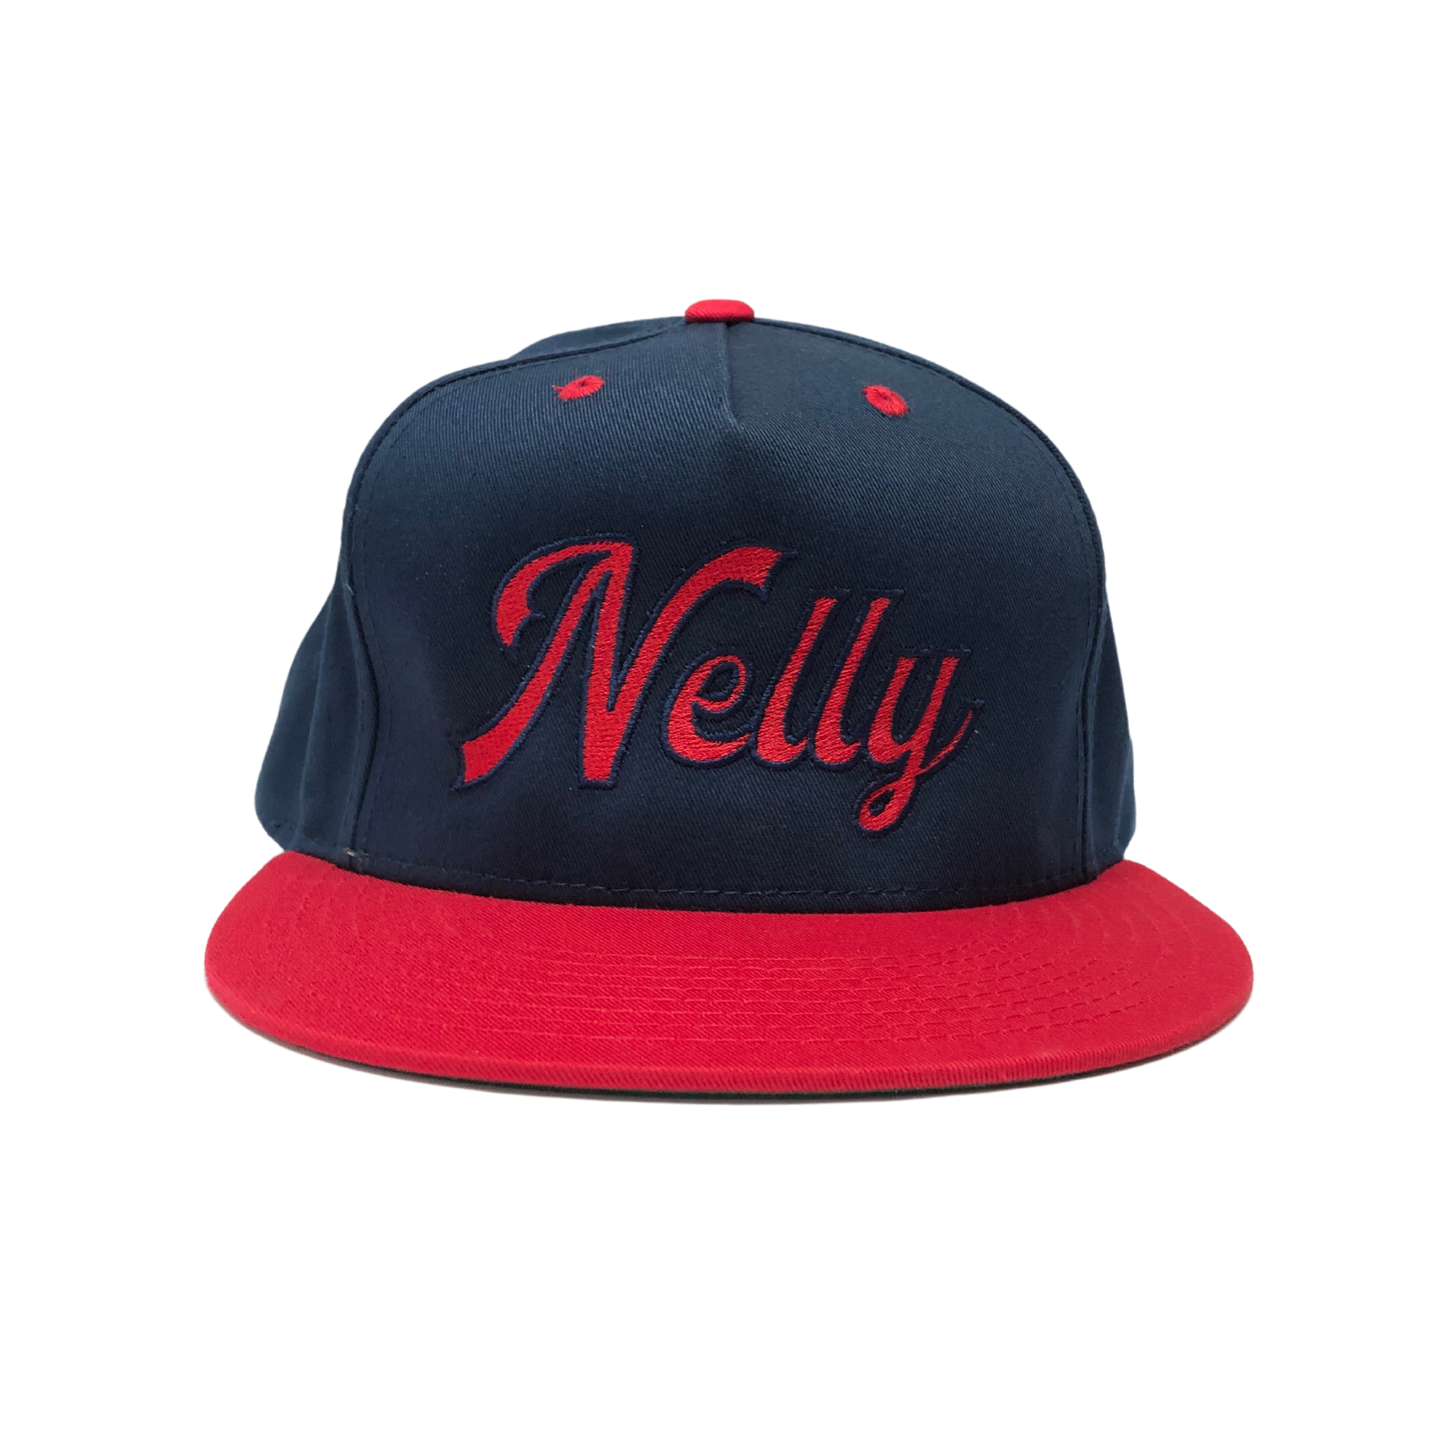 Nelly Script Hat - Navy/Red